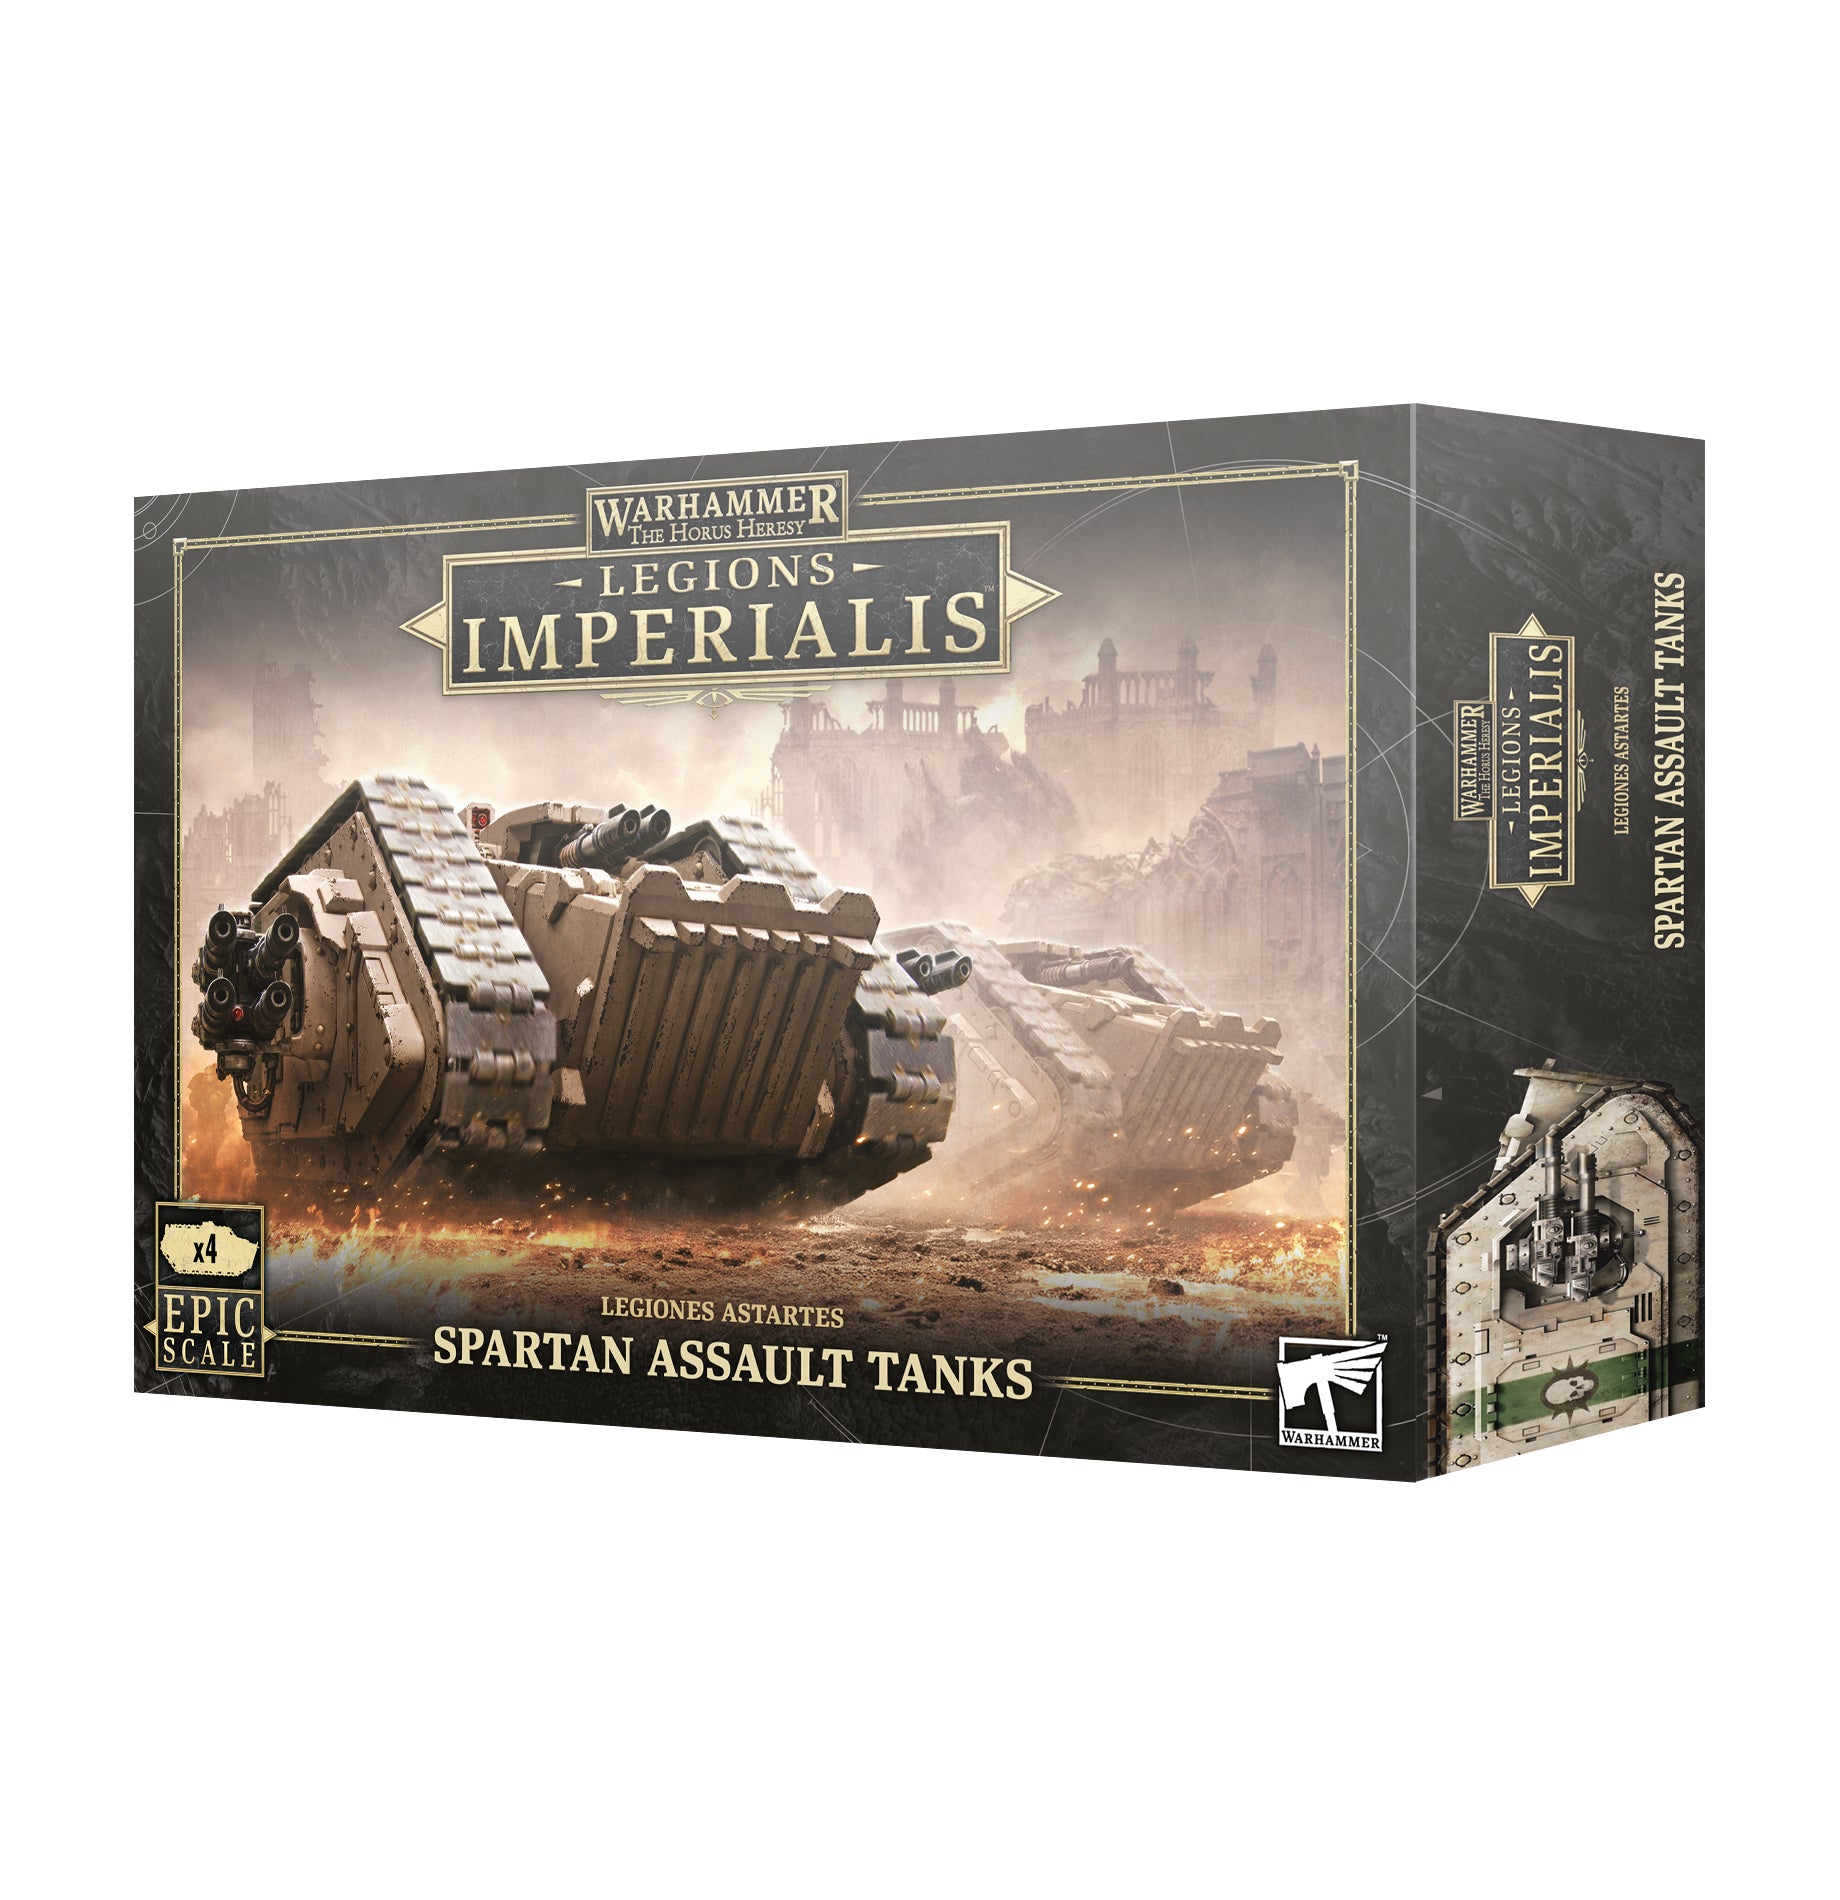 Legions Imperialis Spartan Assault Tanks - Release Date 2/3/24 - Loaded Dice